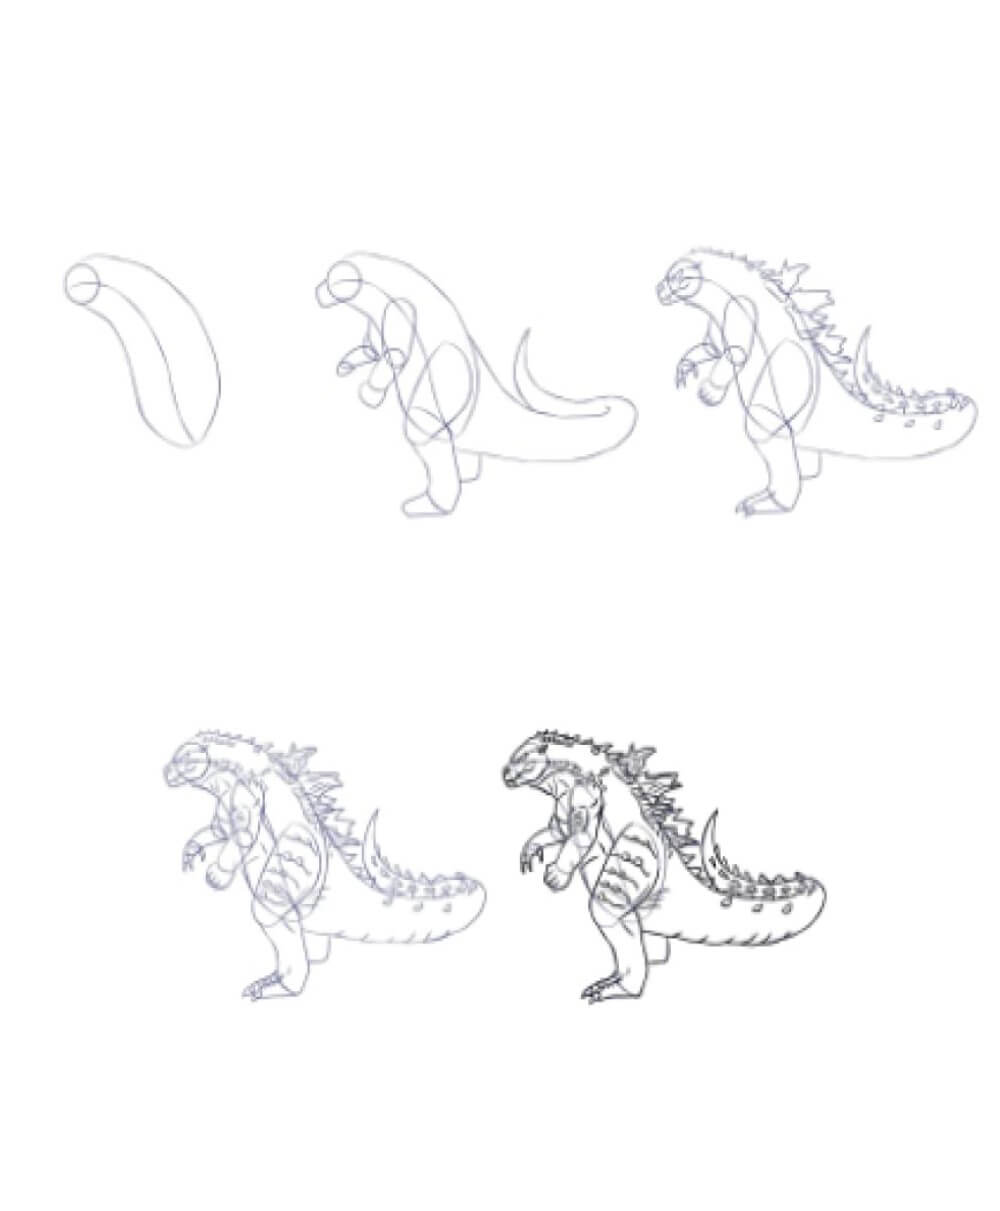 Godzilla idea (1) Drawing Ideas